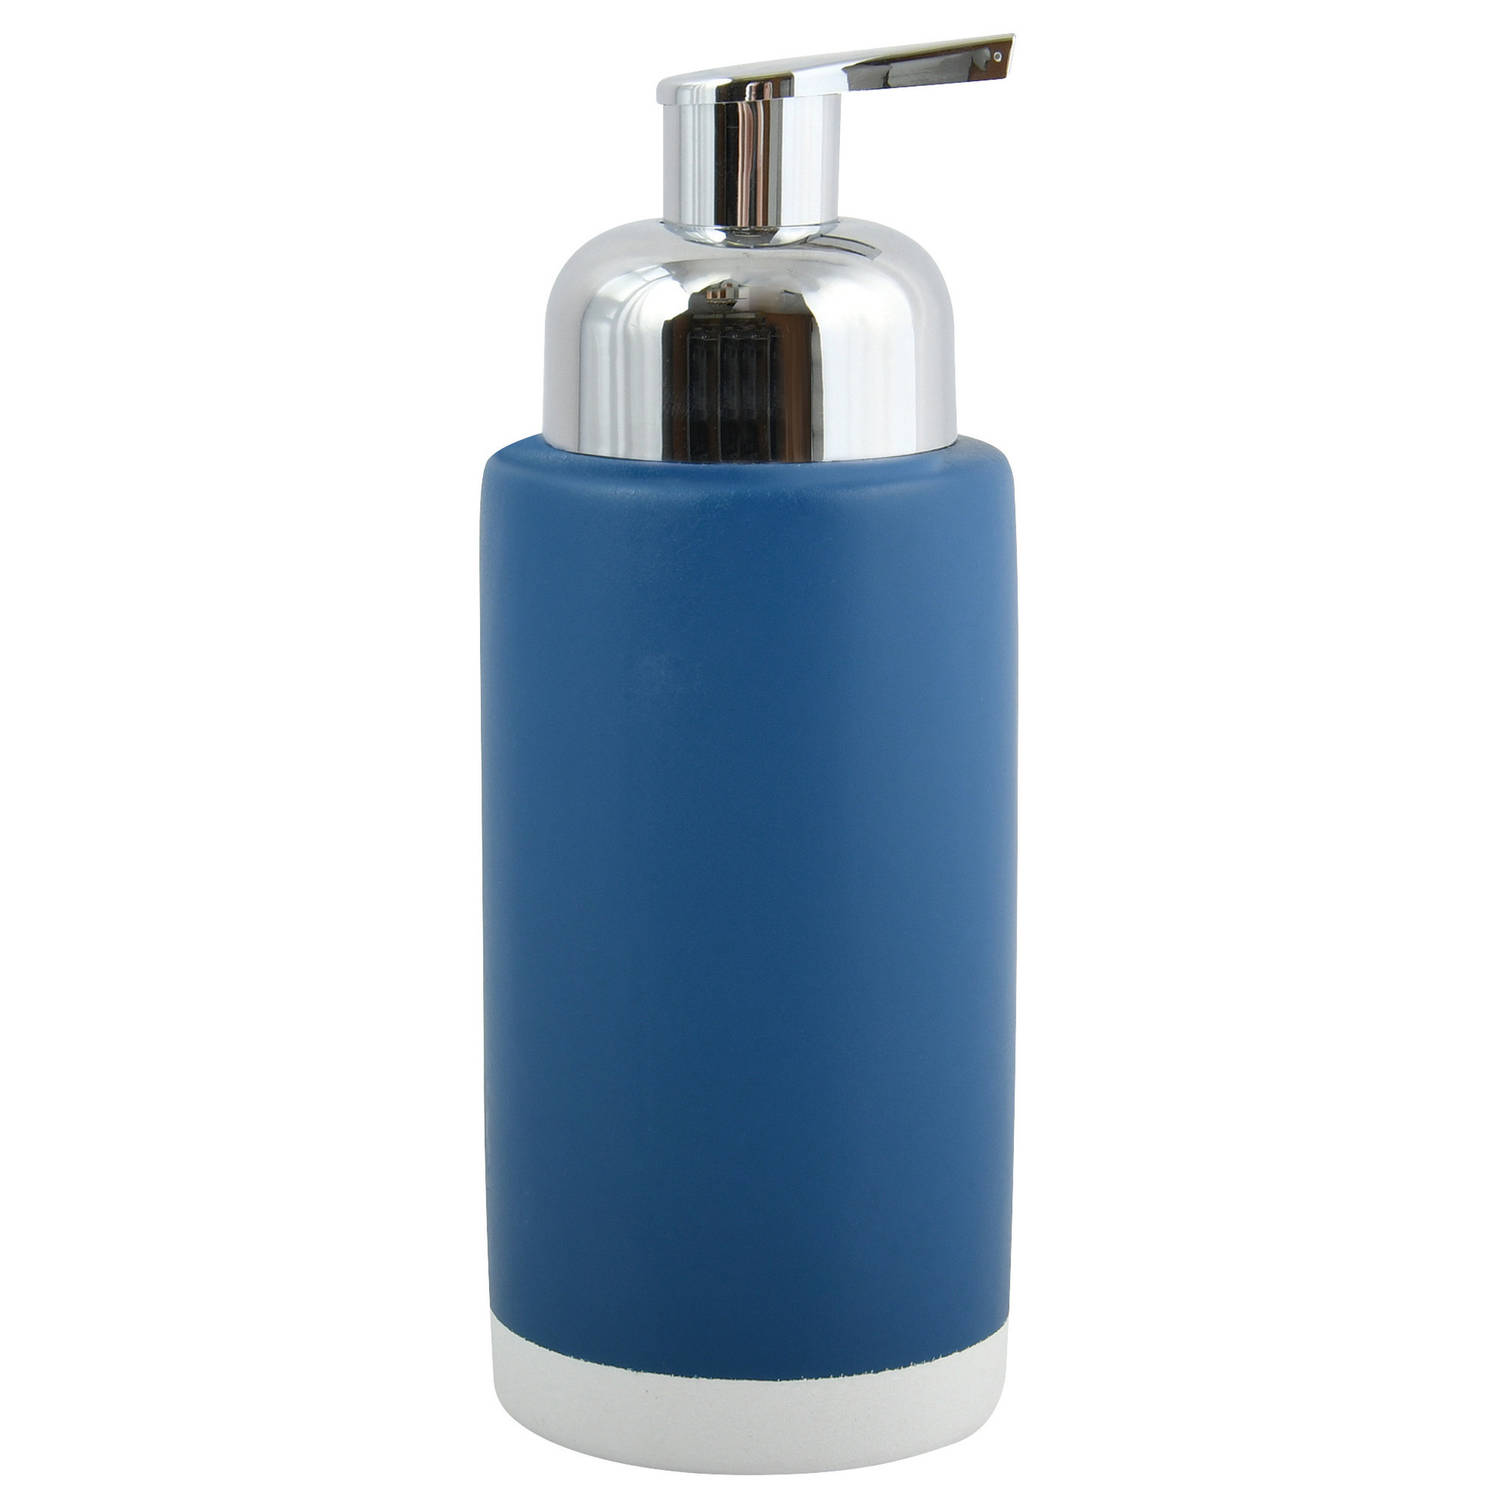 MSV Zeeppompje/dispenser Enzo - keramiek - marine blauw/zilver - 6.5 x 18 cm - 275 ml